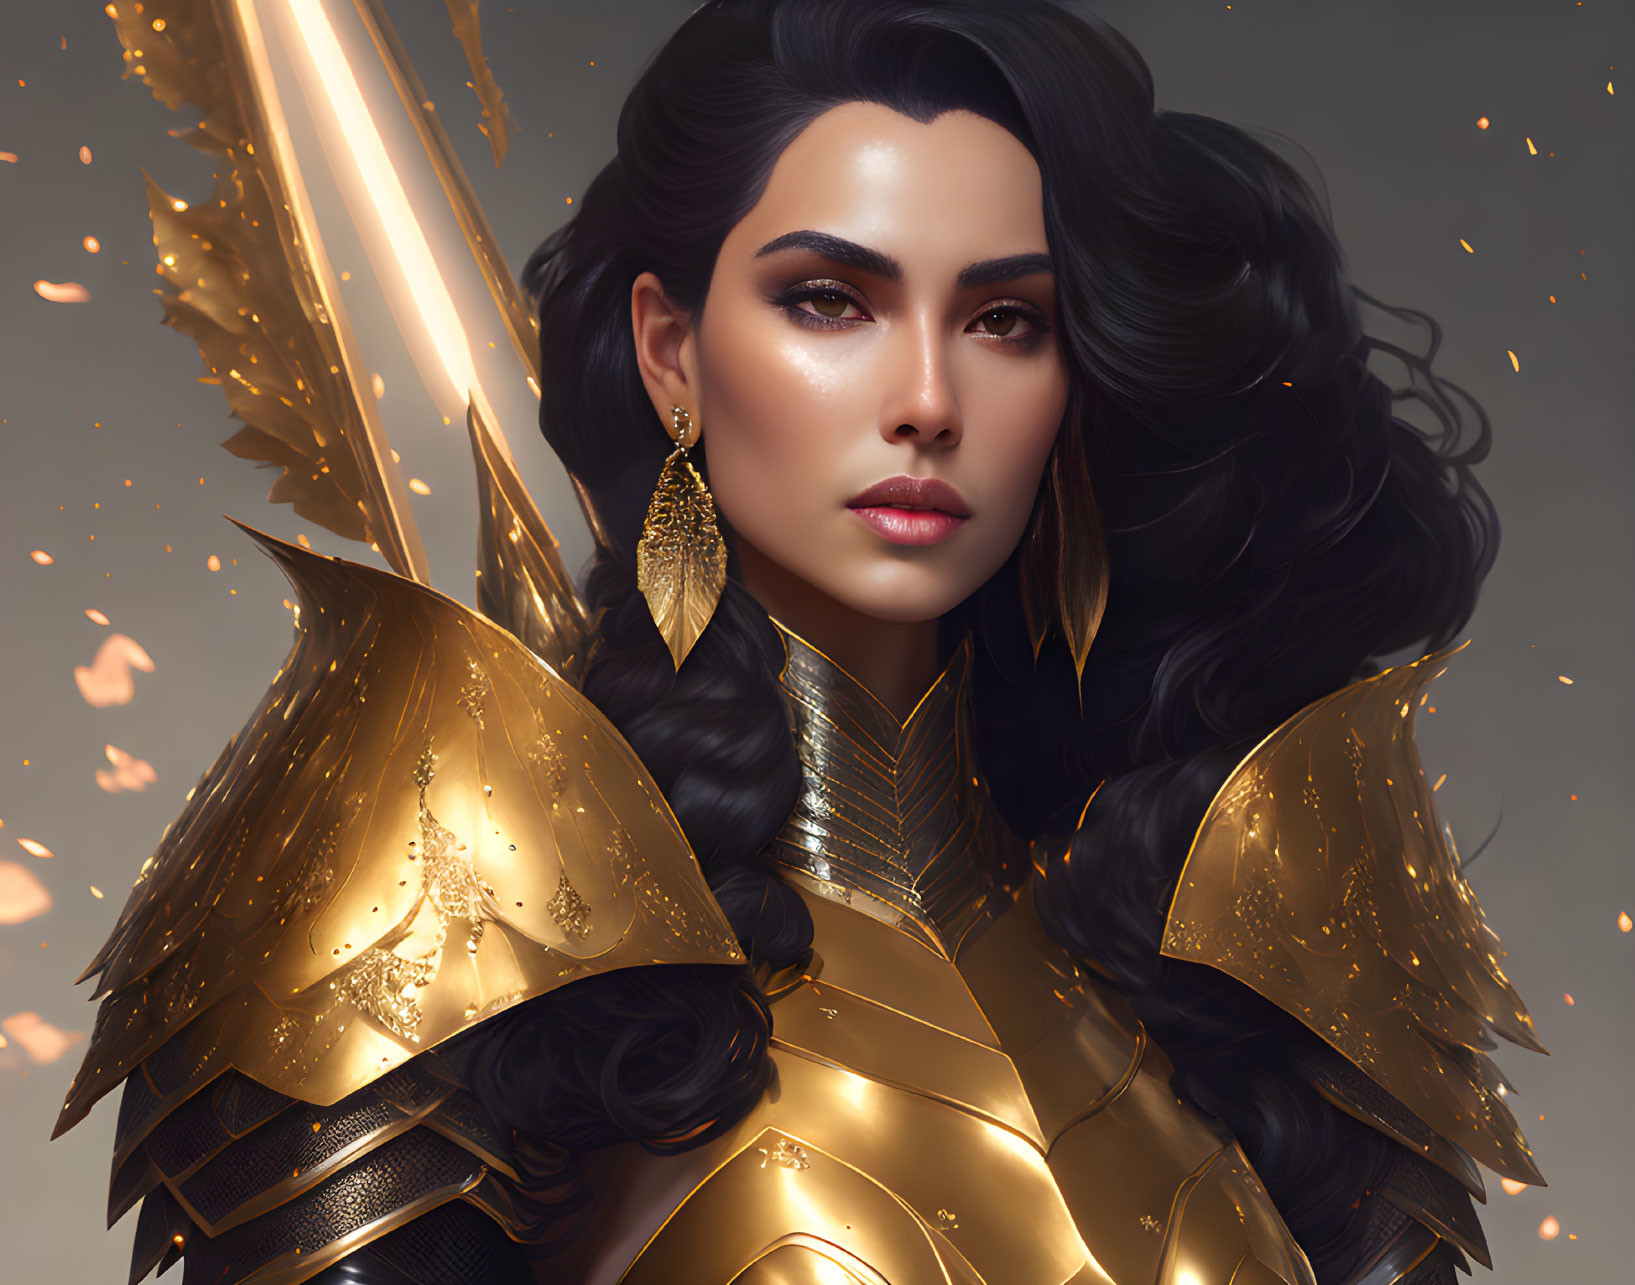 Digital artwork: Woman in golden armor with dark hair